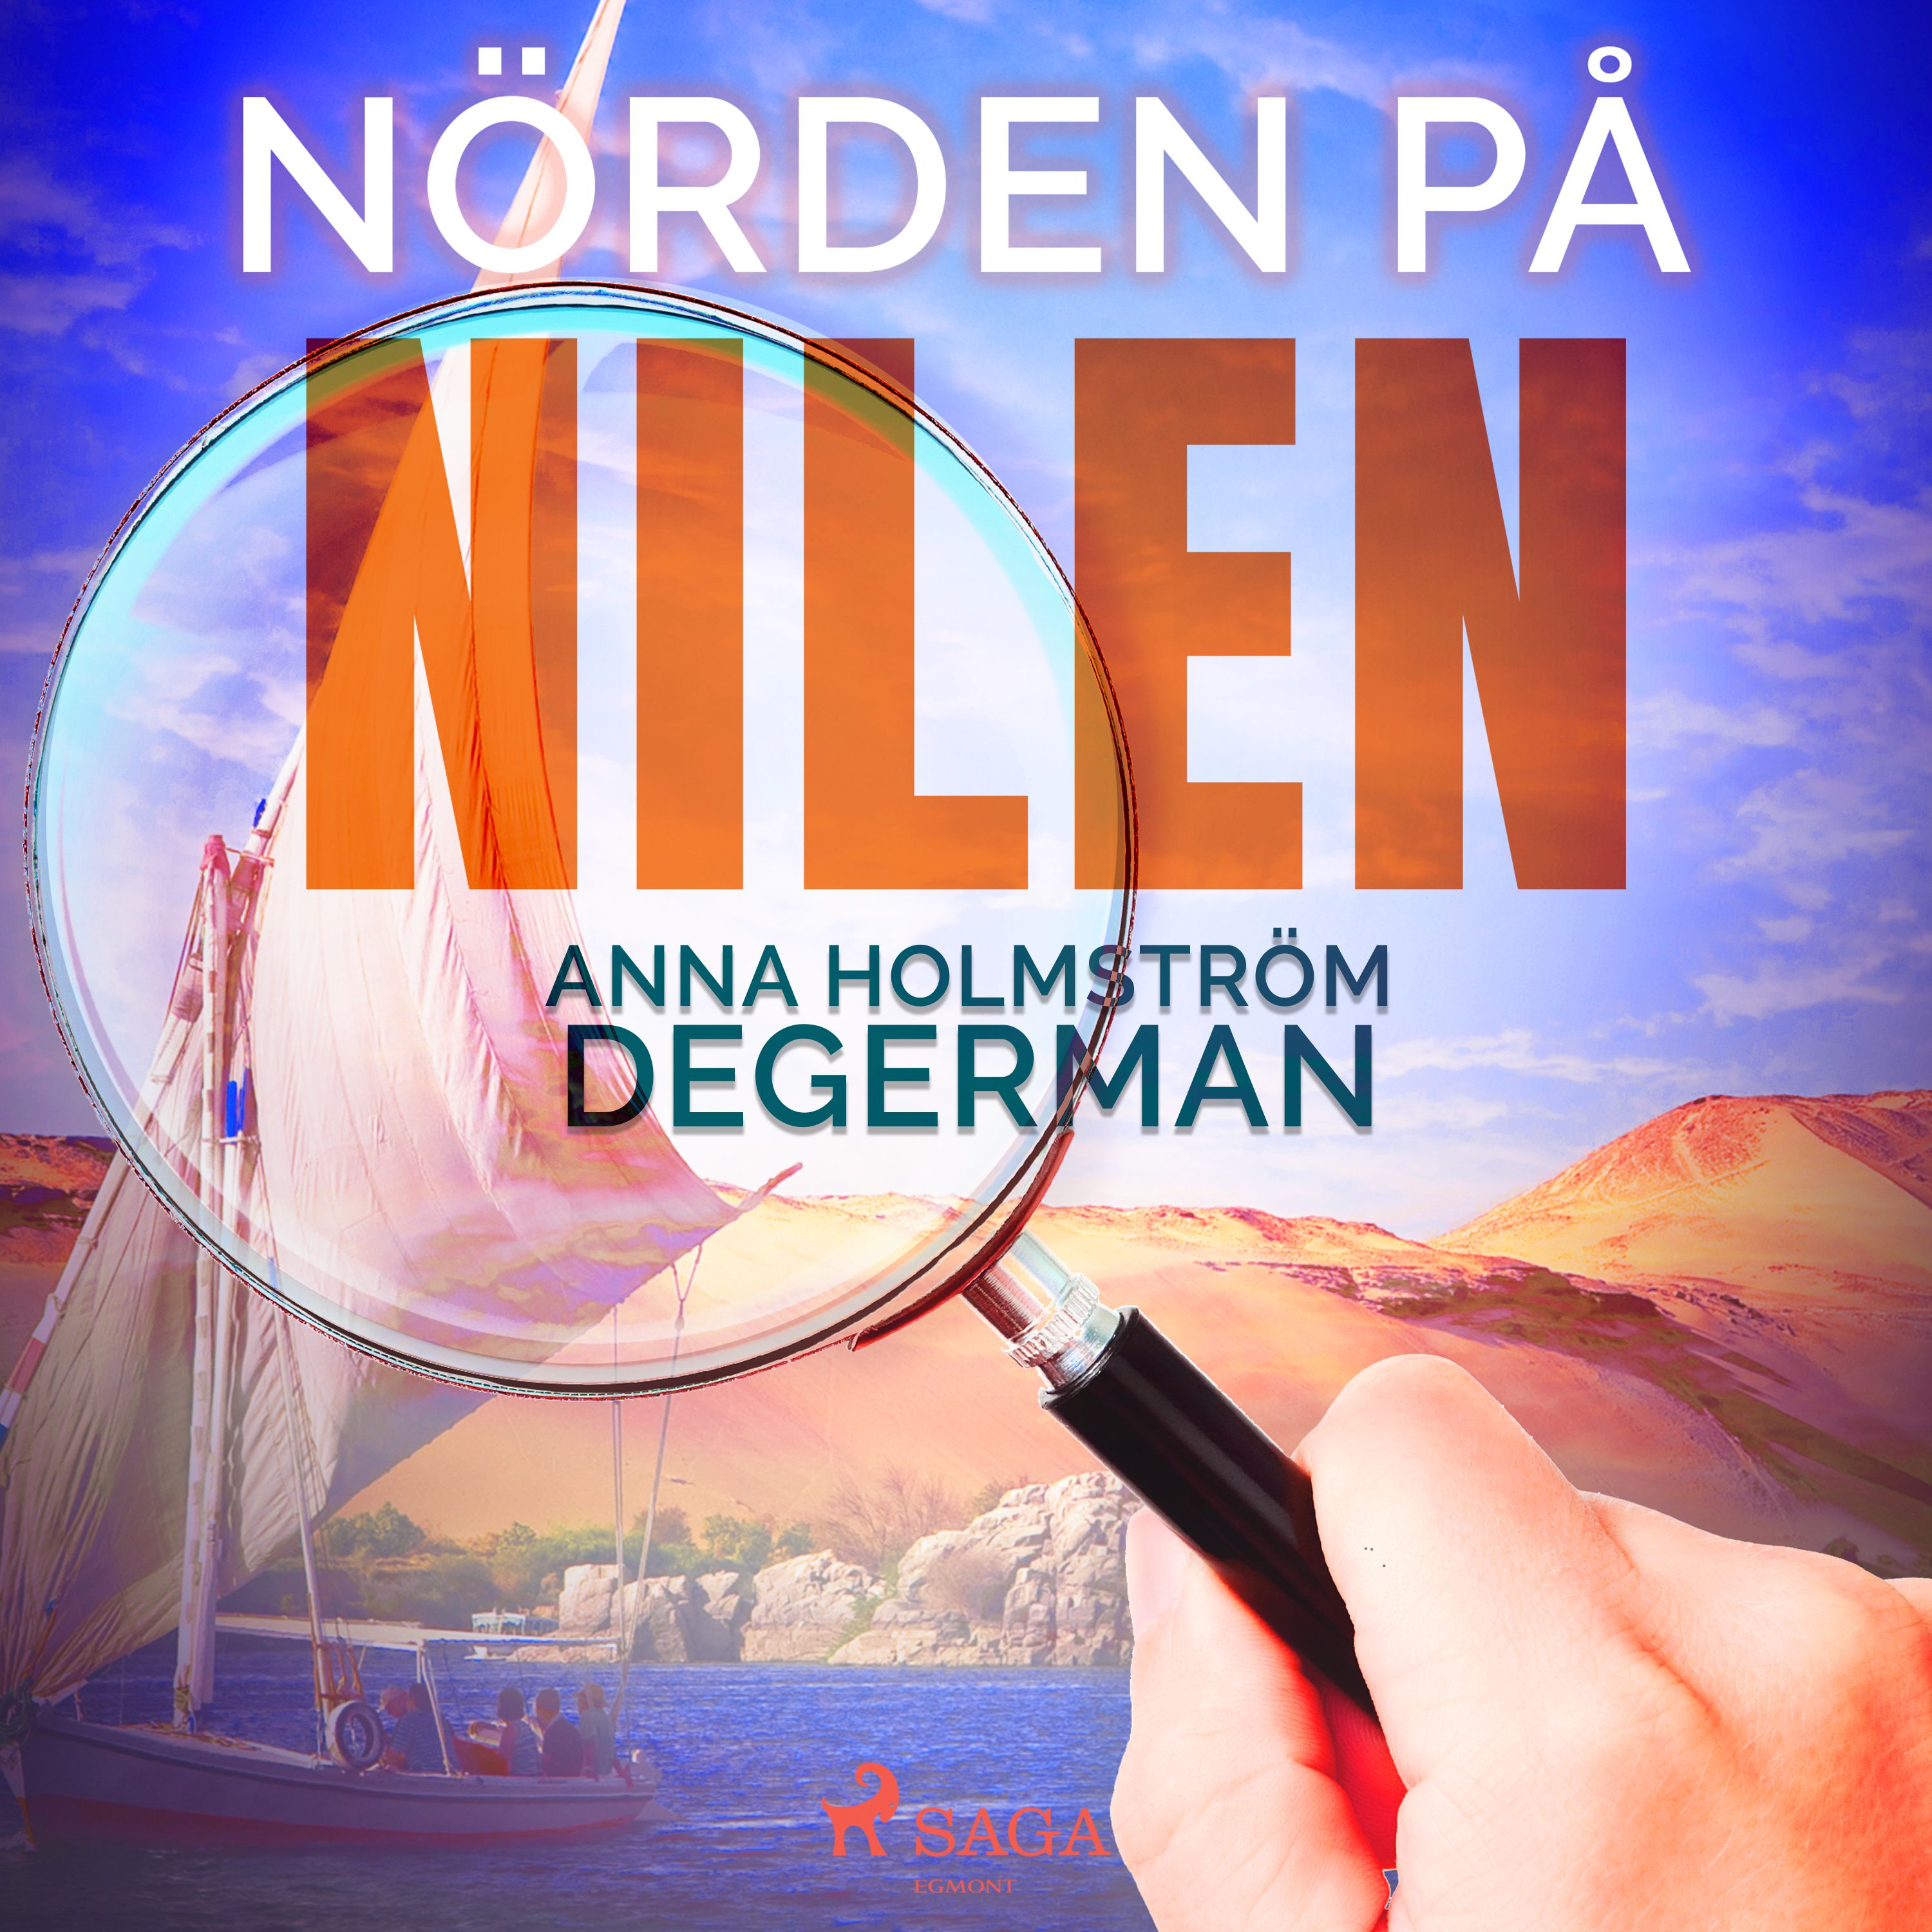 Nörden på nilen, audiobook by Anna Holmström Degerman